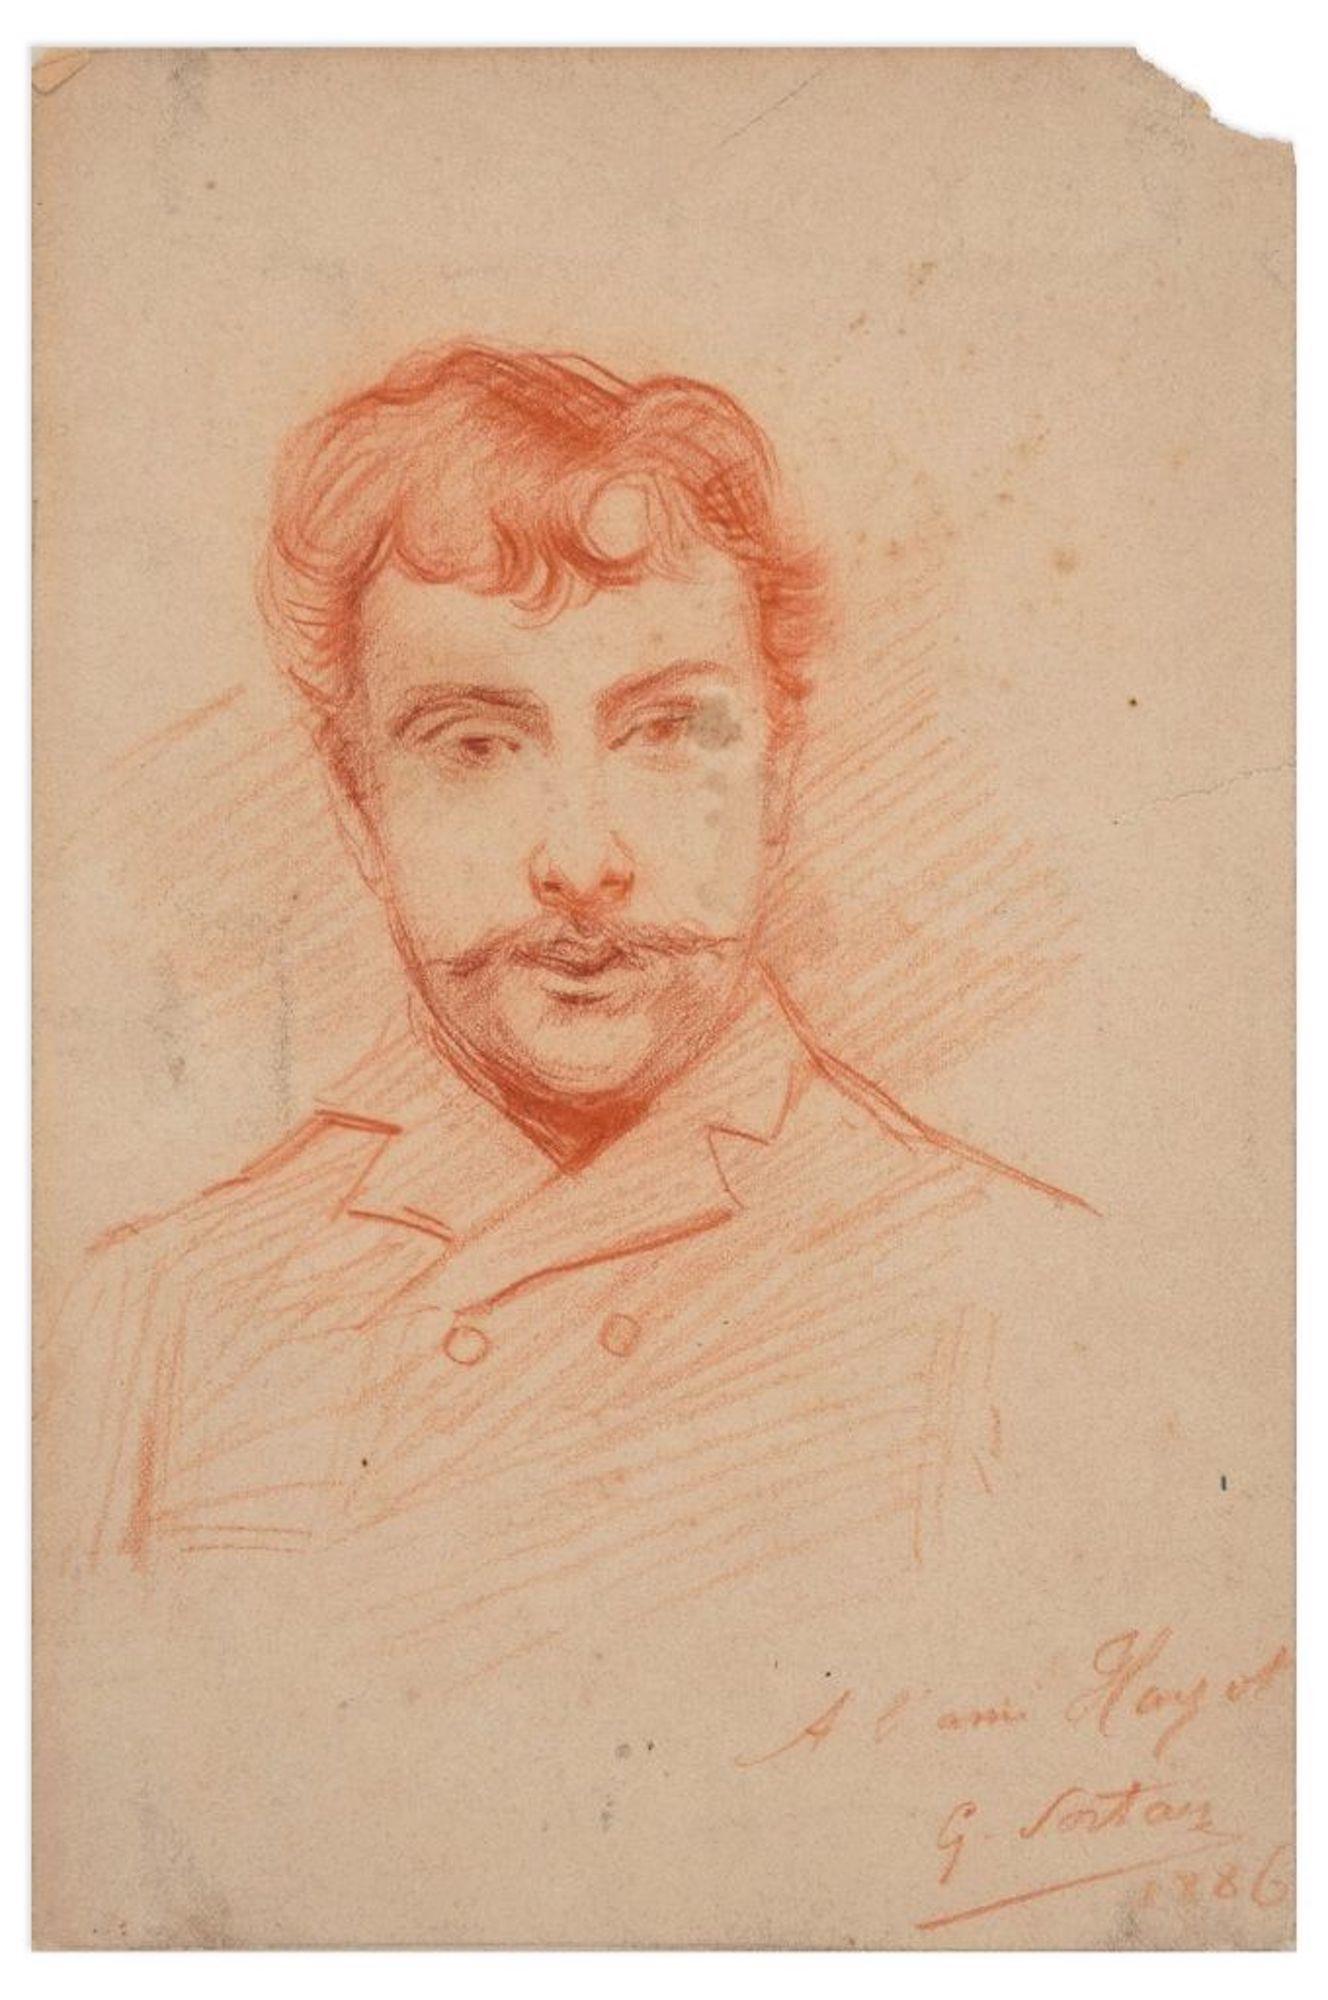 Portrait of a Man - Original Pencil Drawing by G.J. Sortais - 1886